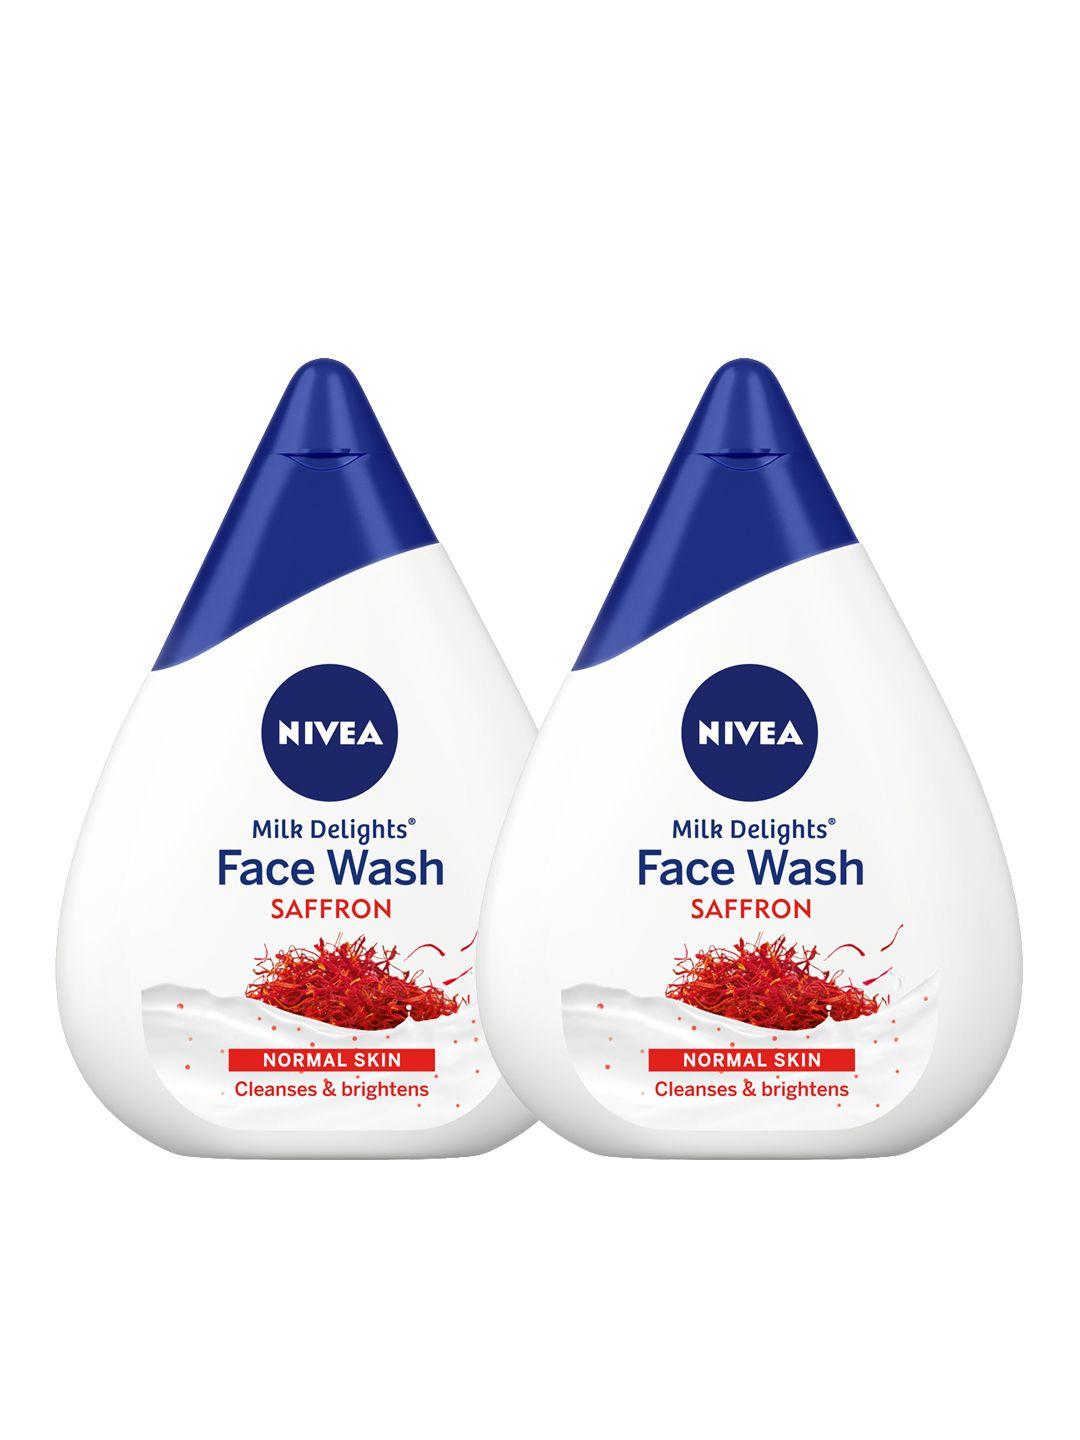 nivea set of 2 milk delights face wash with precious saffron for normal skin - 100ml each